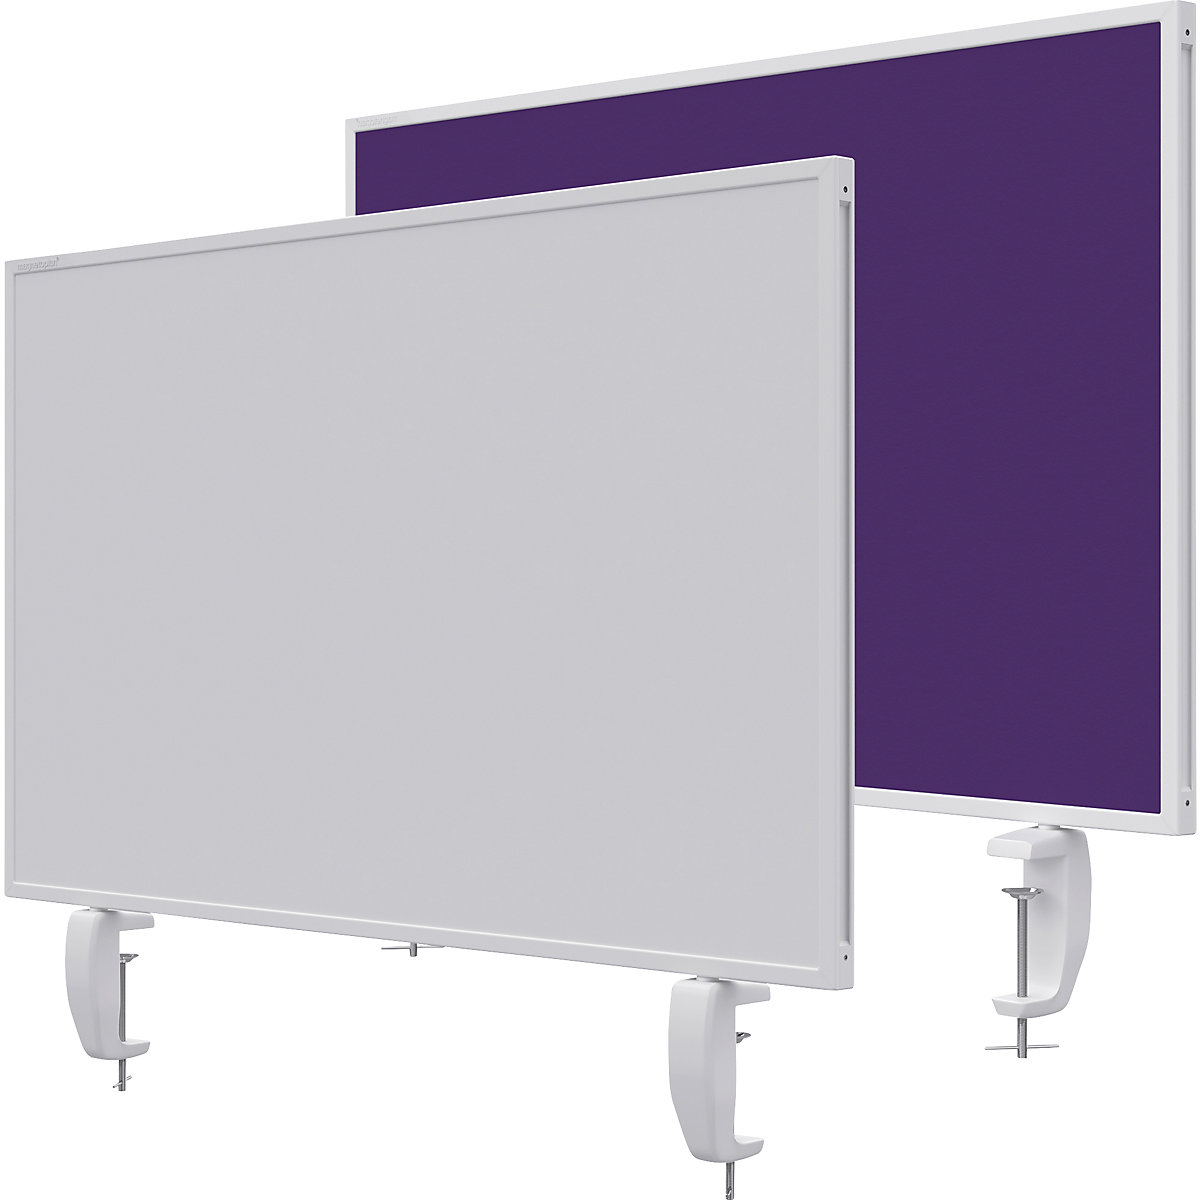 Tischtrennwand VarioPin magnetoplan, Whiteboard/Filz, Breite 800 mm, violett-25